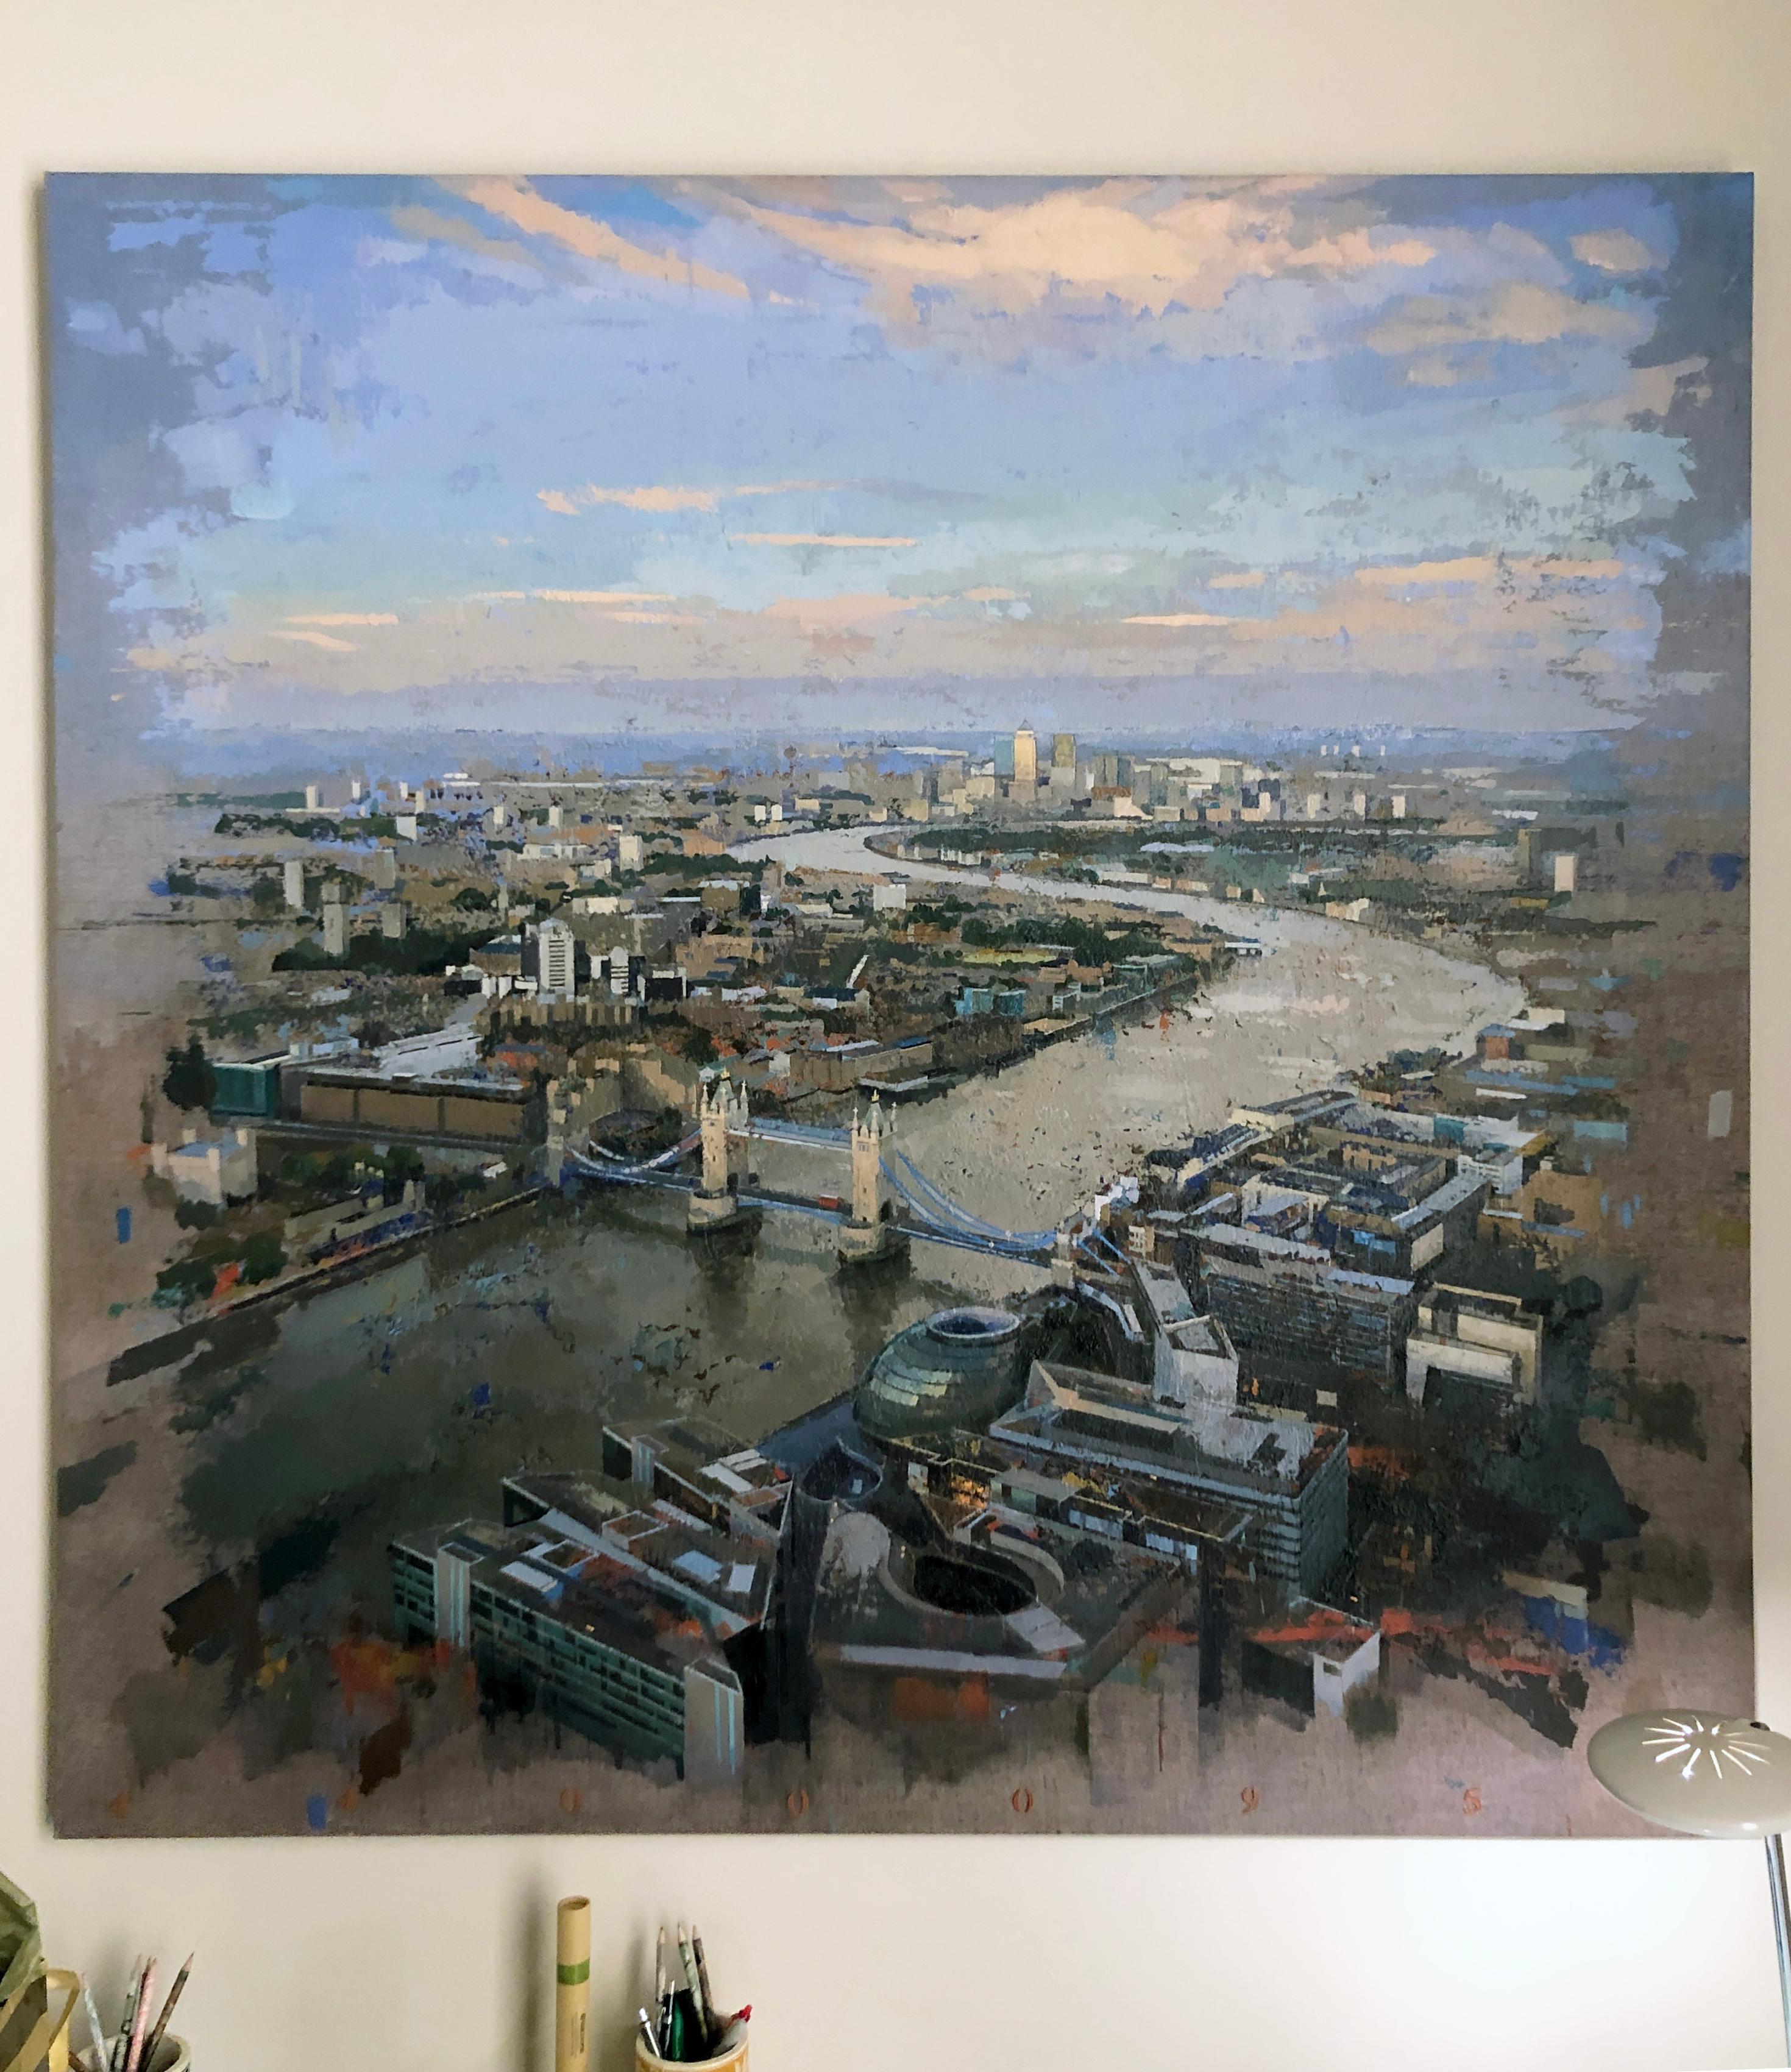 London Bridge - Original Painting on Linen, Areal View, Bridge and River Thames - Gray Landscape Painting by Albert Vidal Moreno